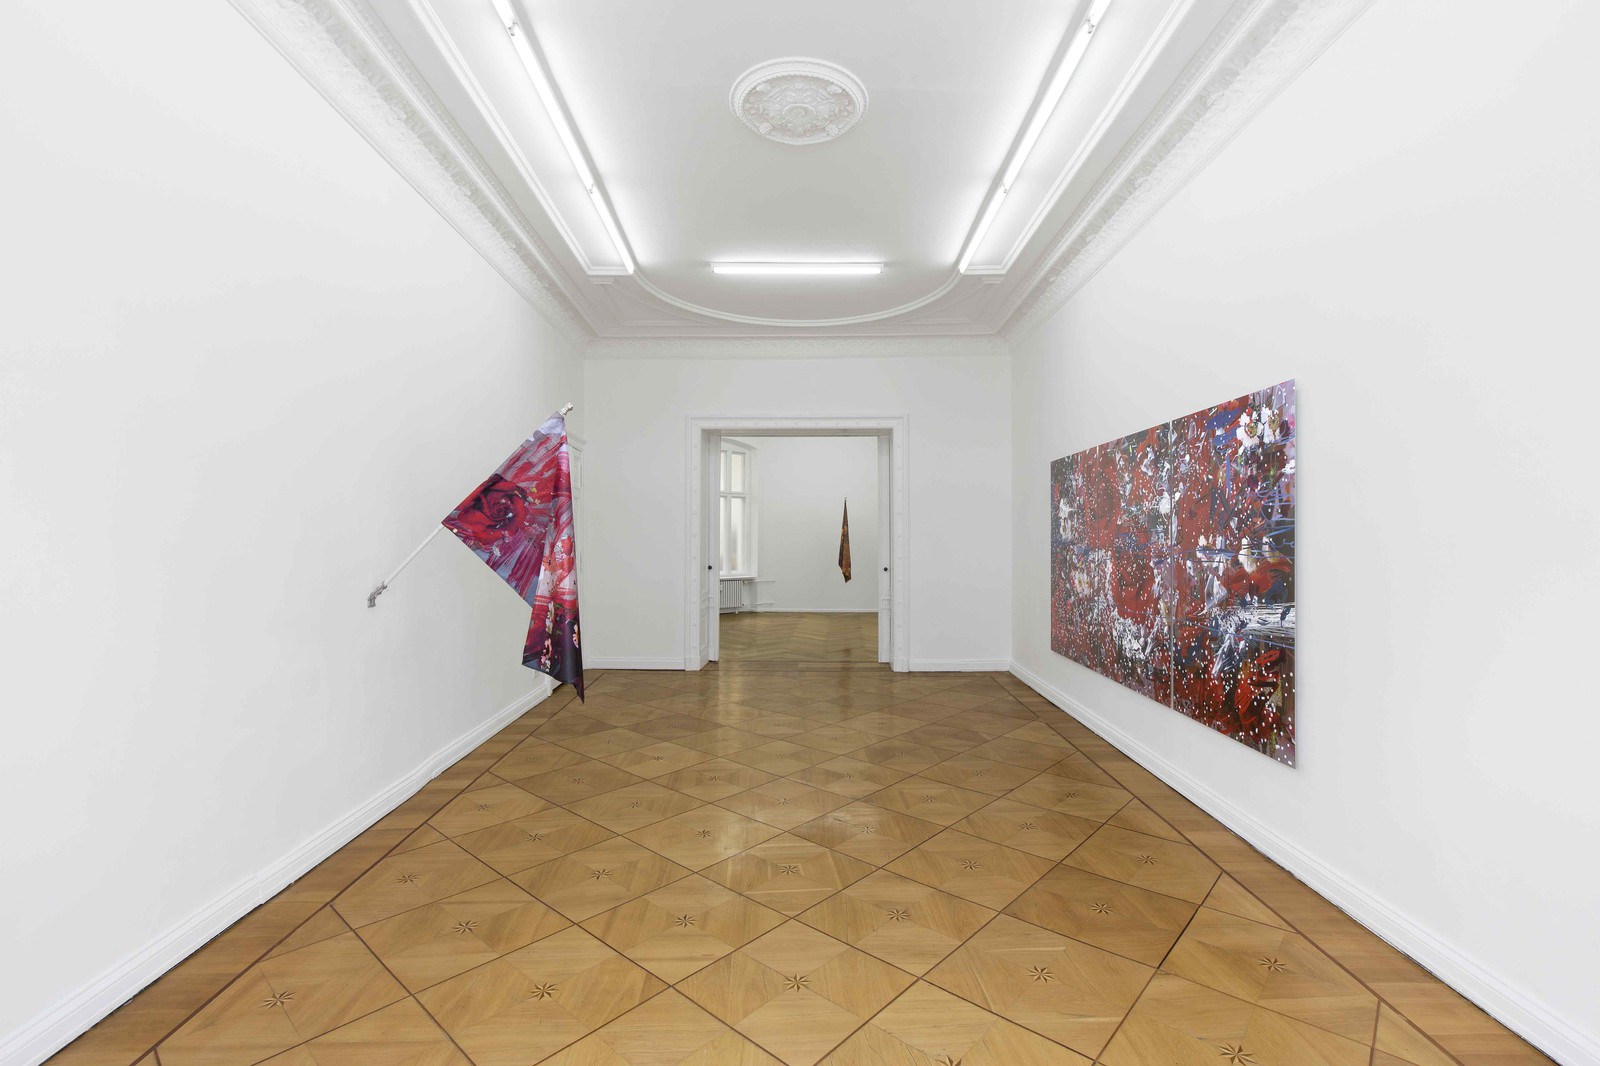 Installation view, Die Rose, Société, Berlin, 2016